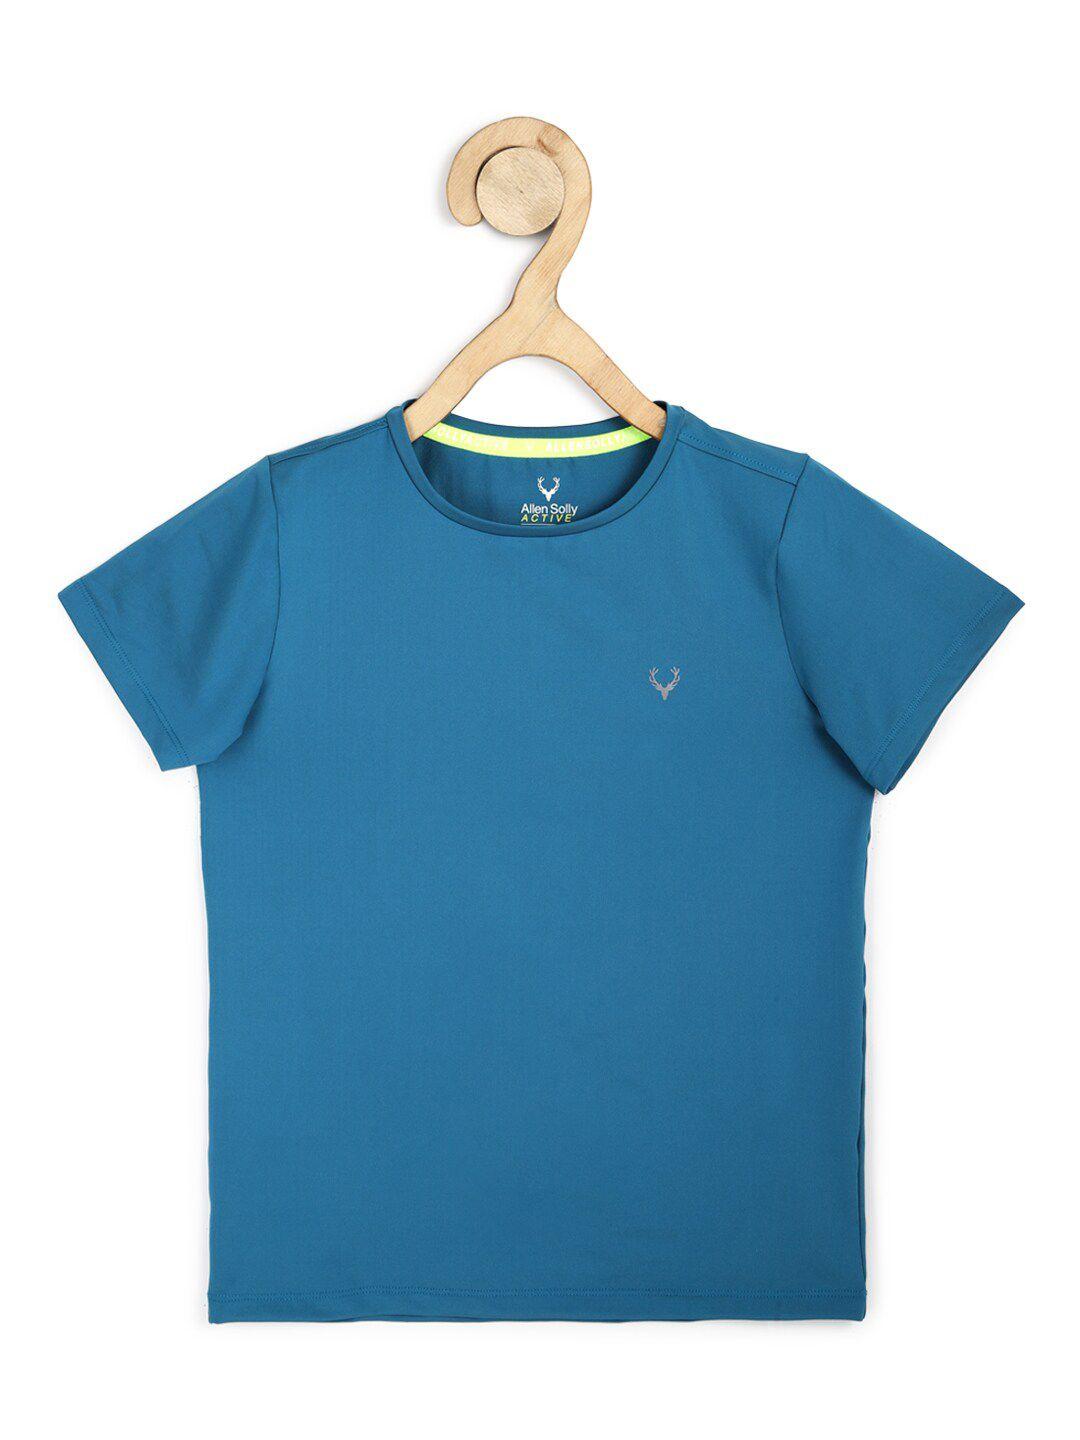 allen solly junior boys blue applique t-shirt